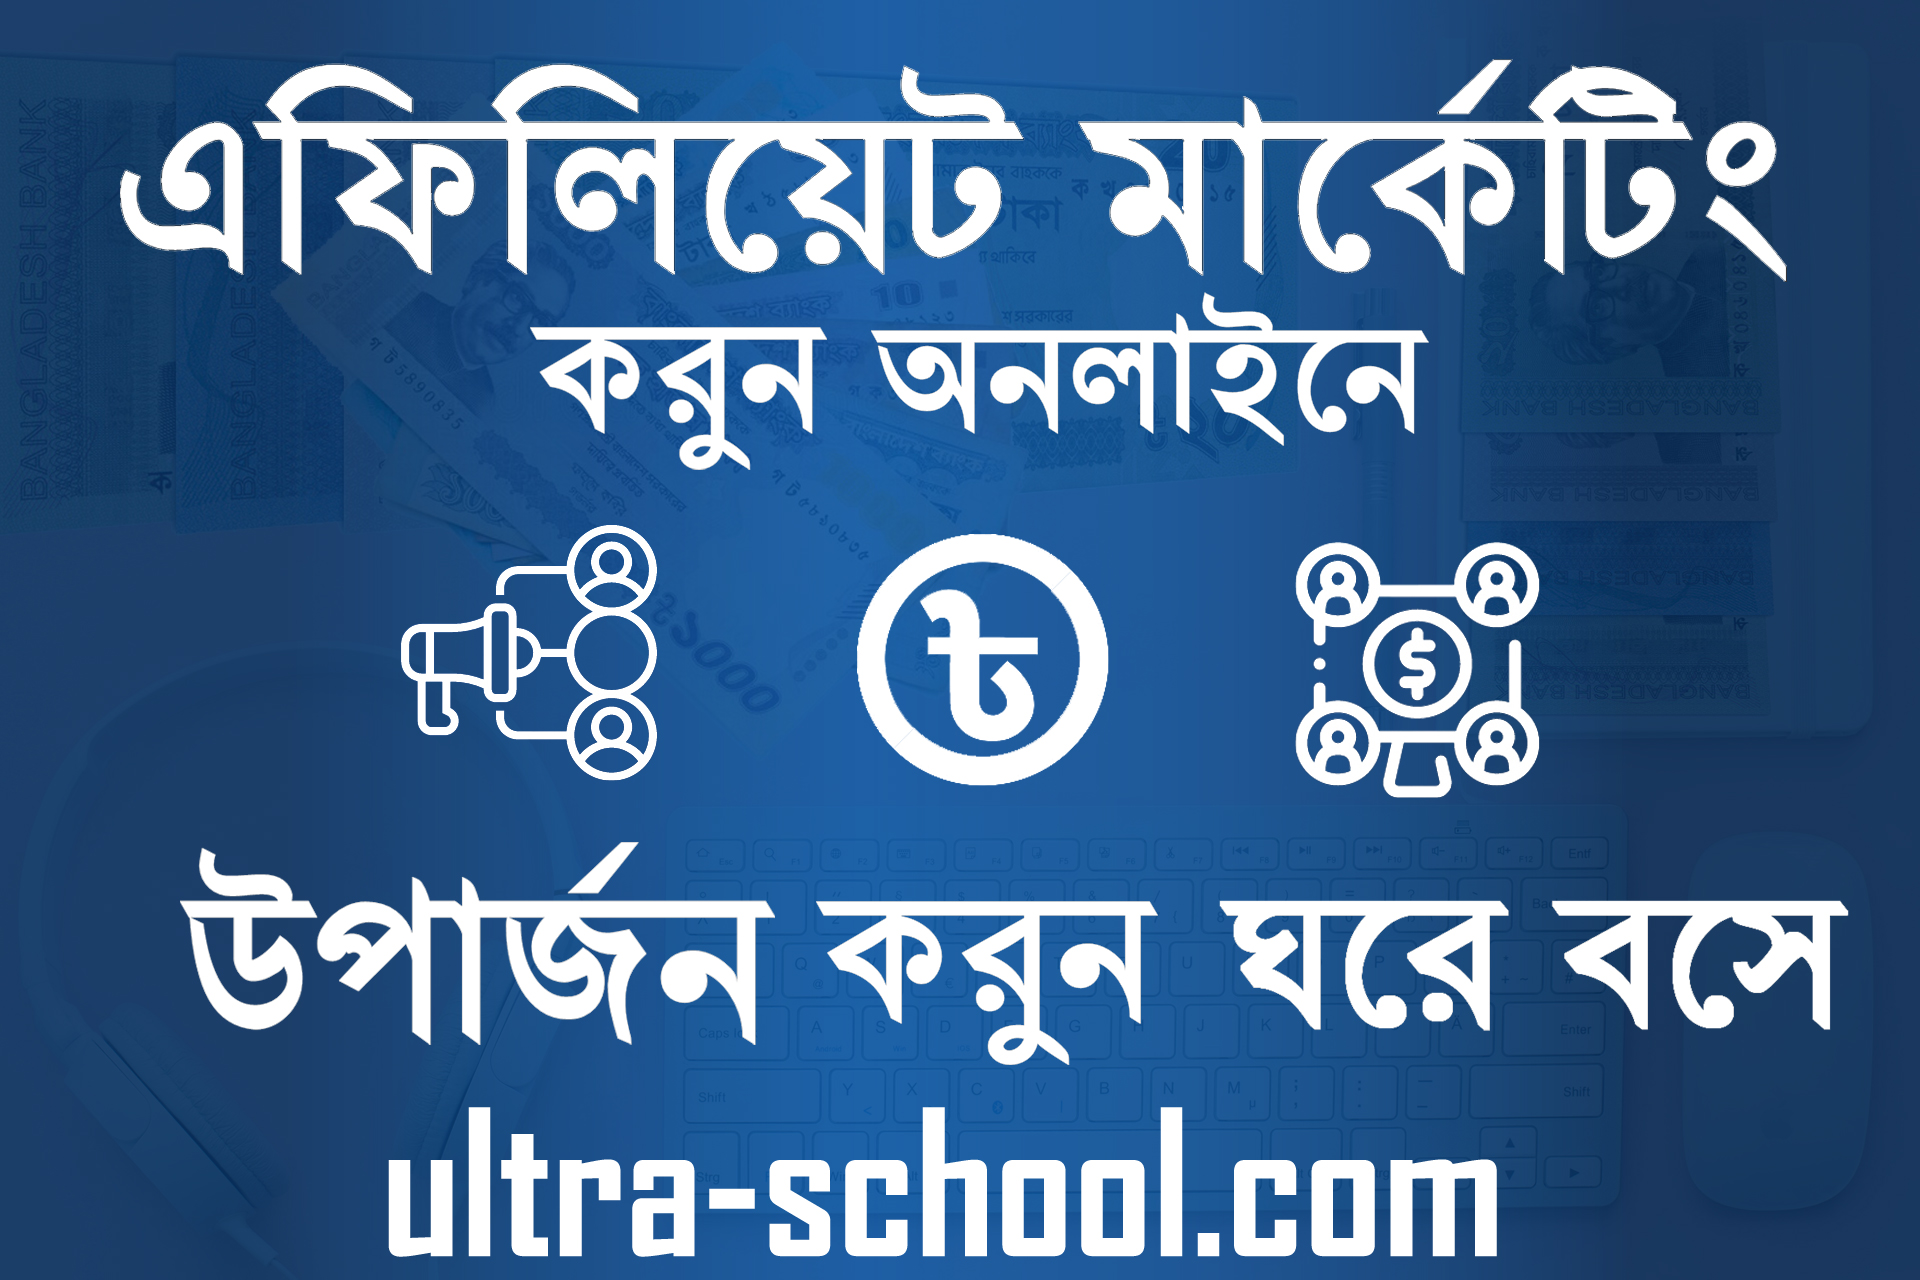 Affiliate Marketing of Ultra School com